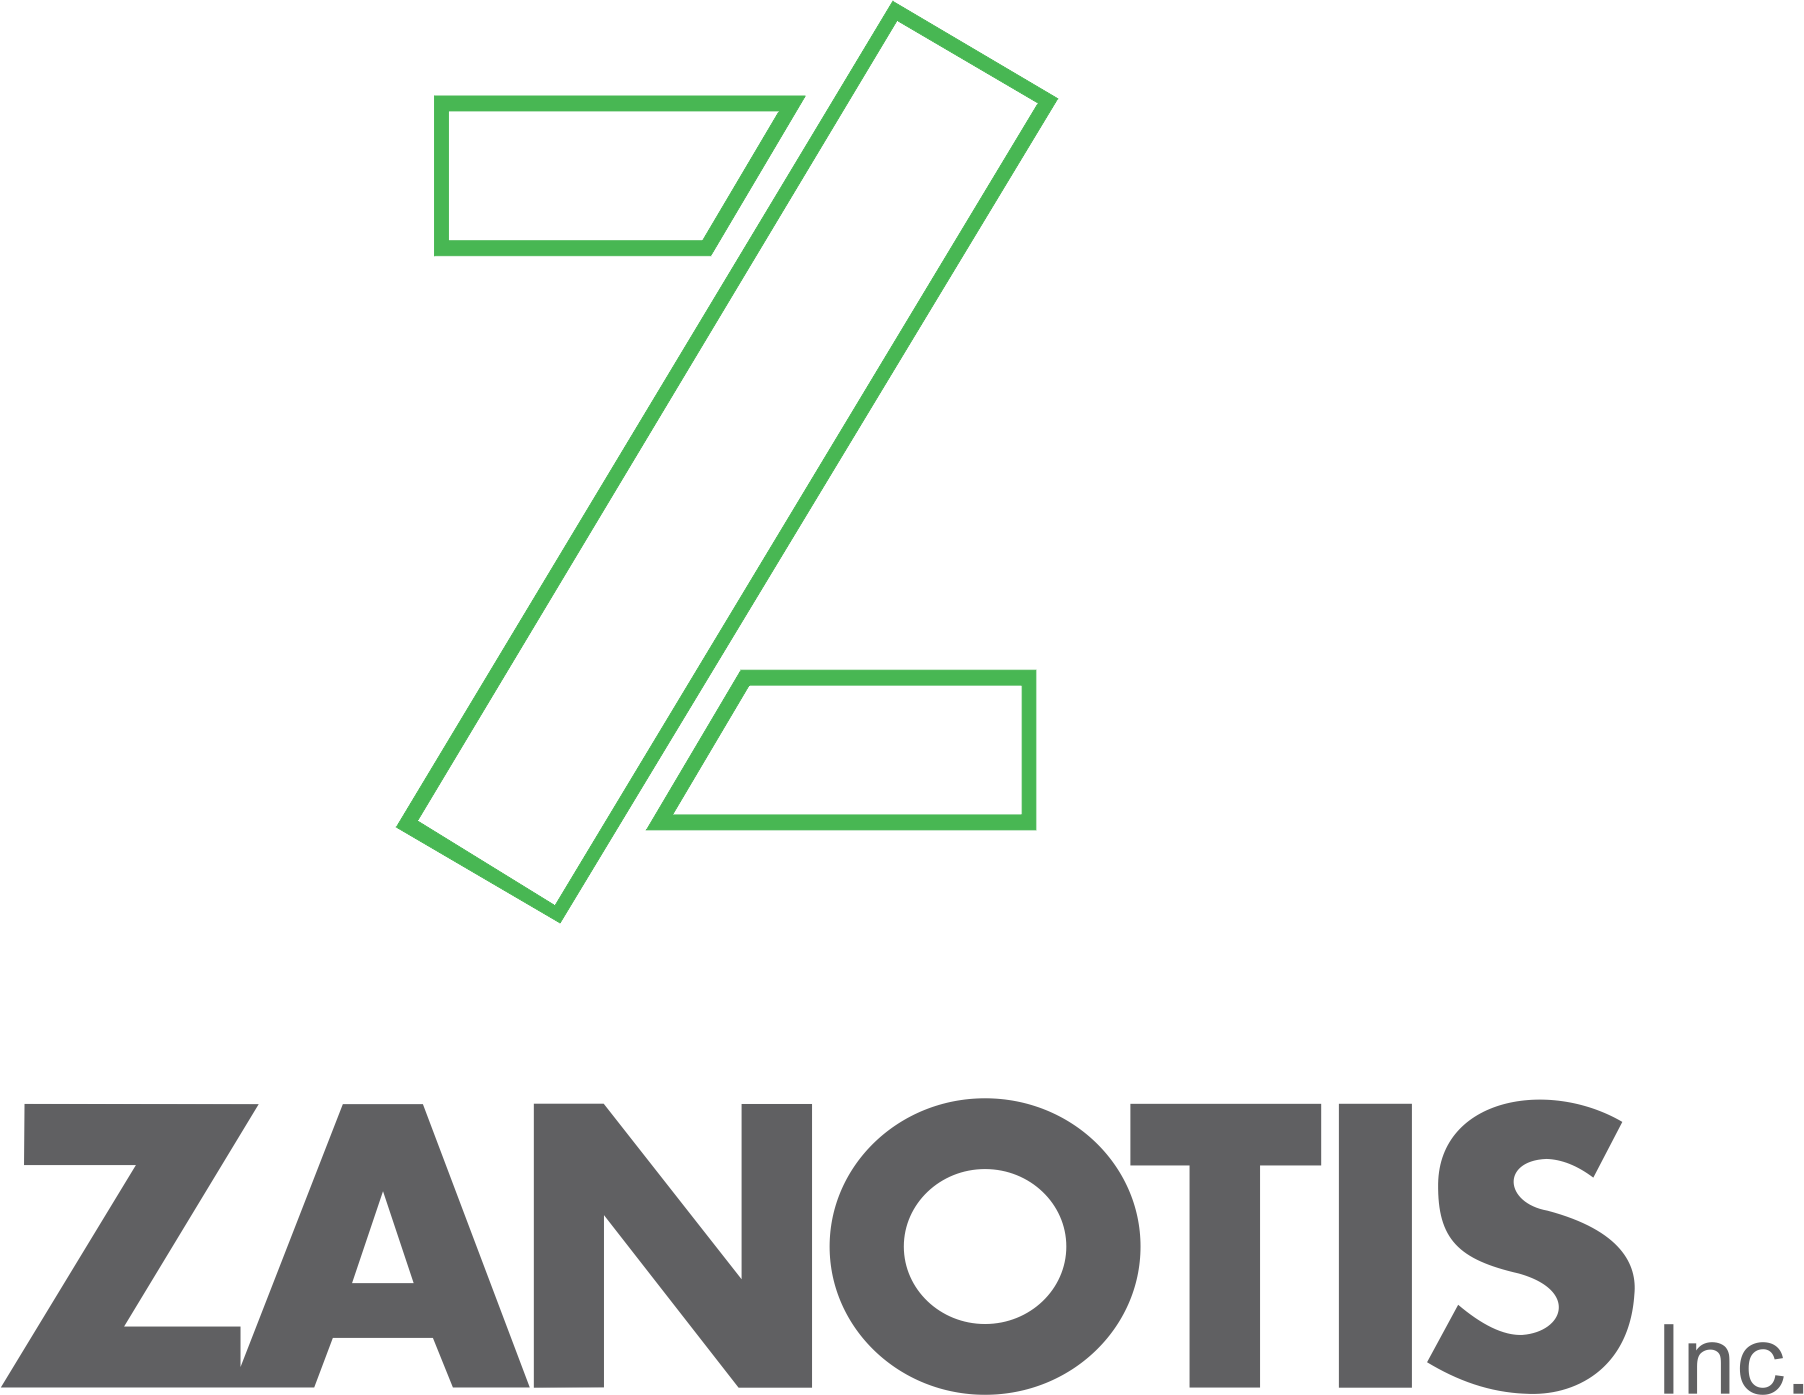 ZANOTIS logo